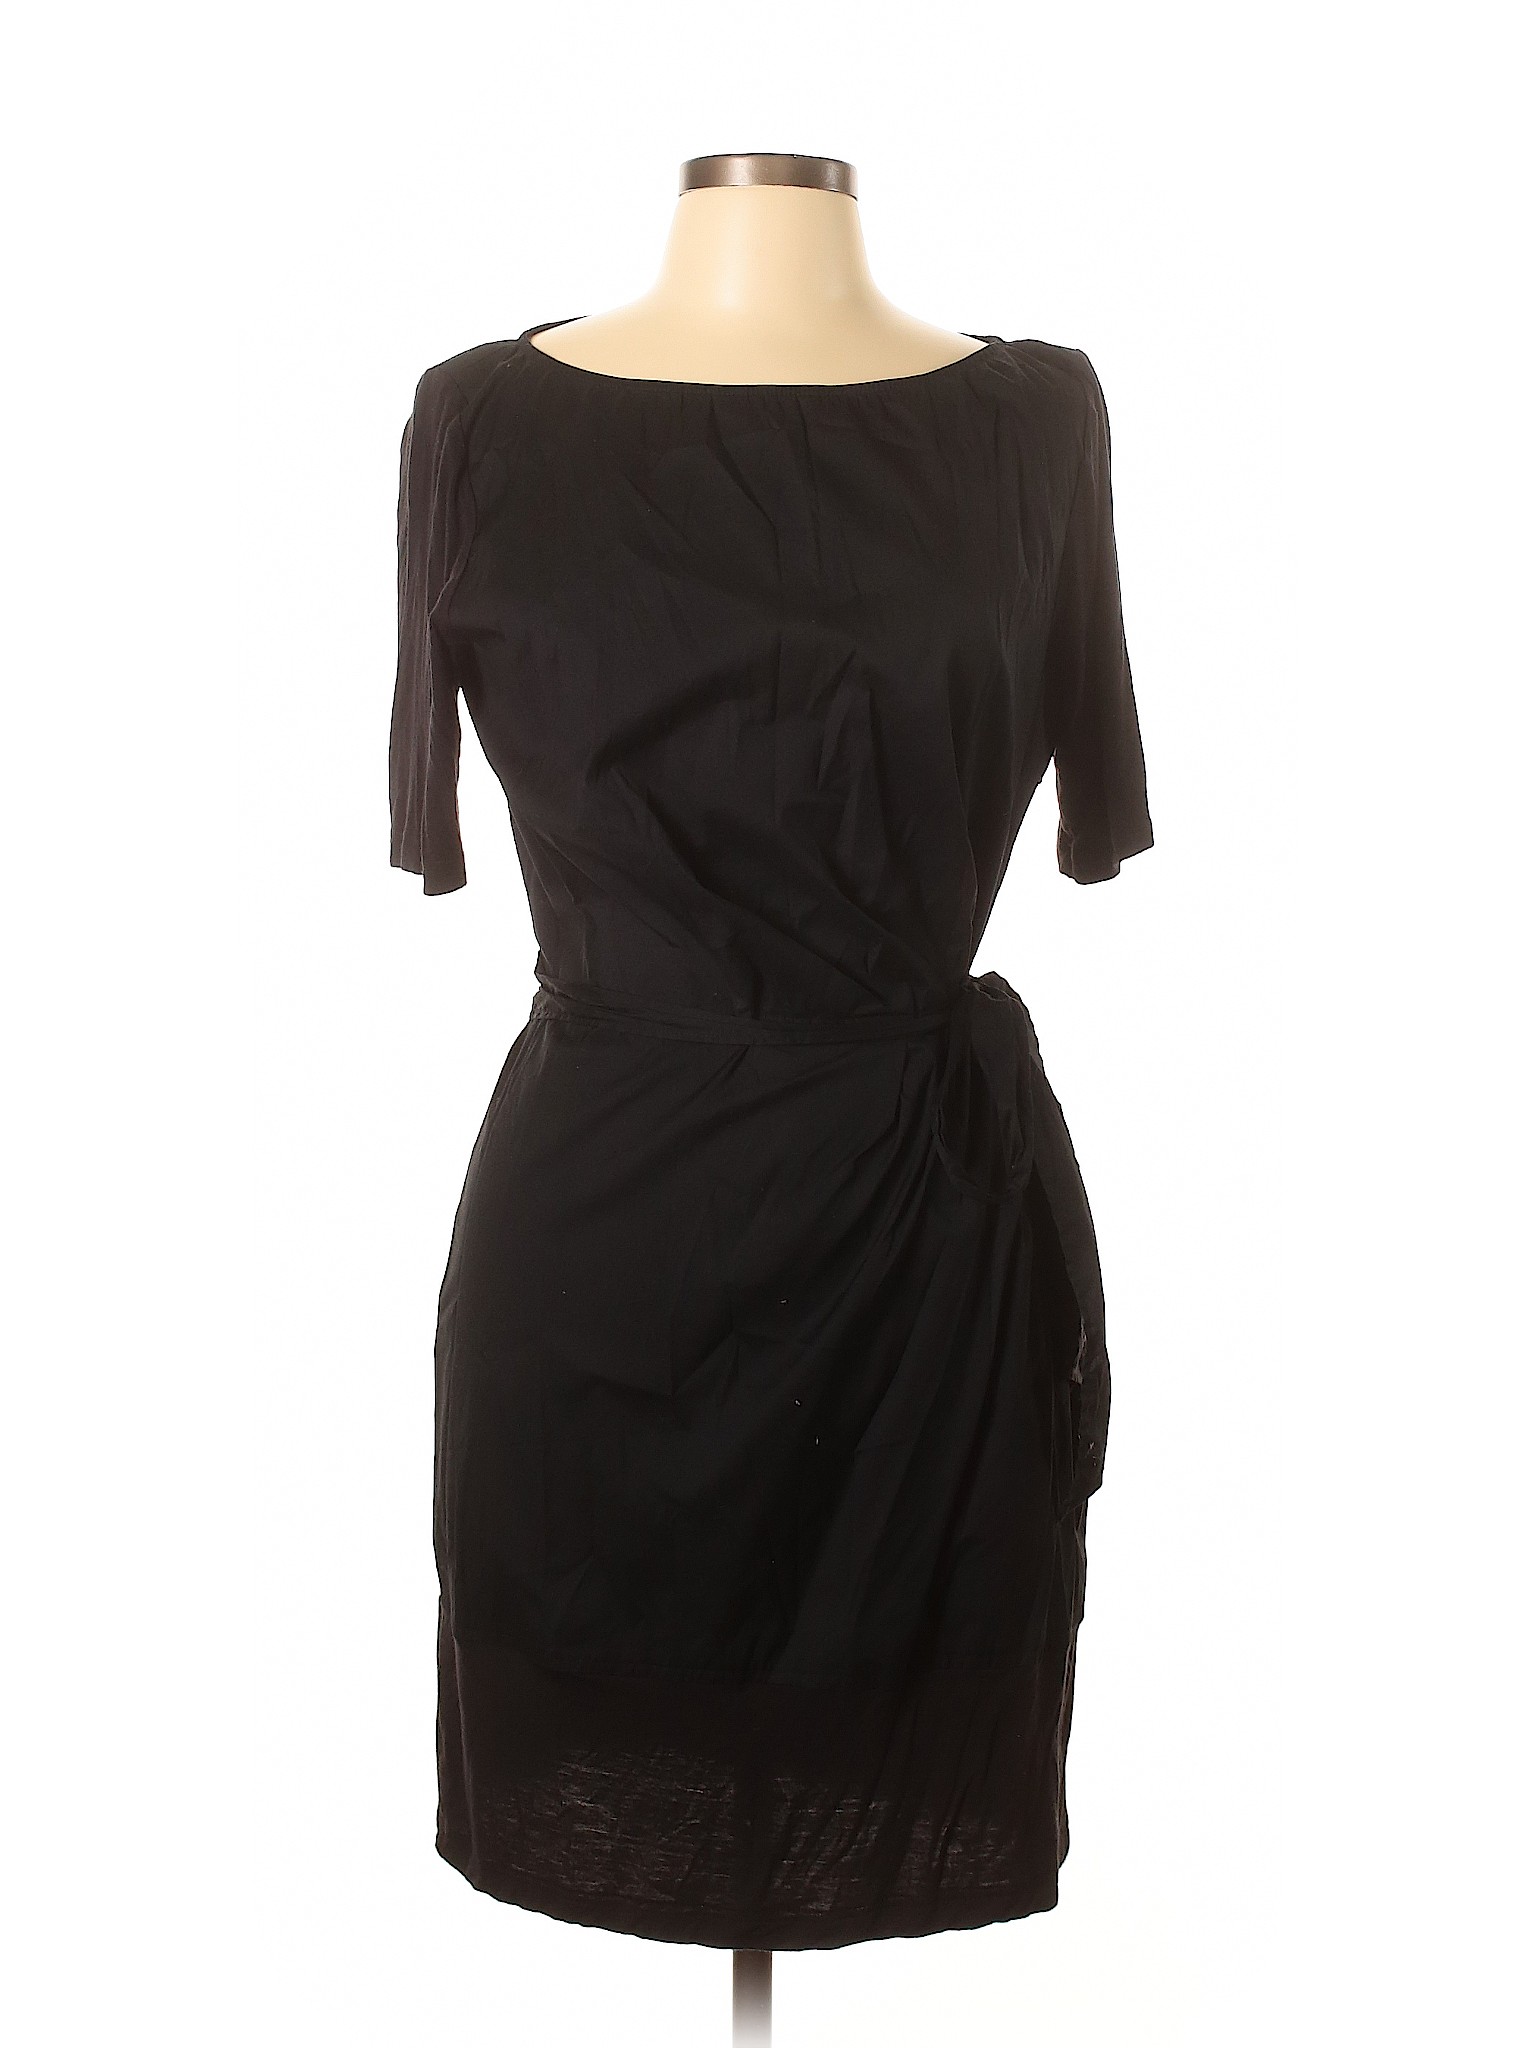 Kenneth Cole New York Women Black Casual Dress L | eBay